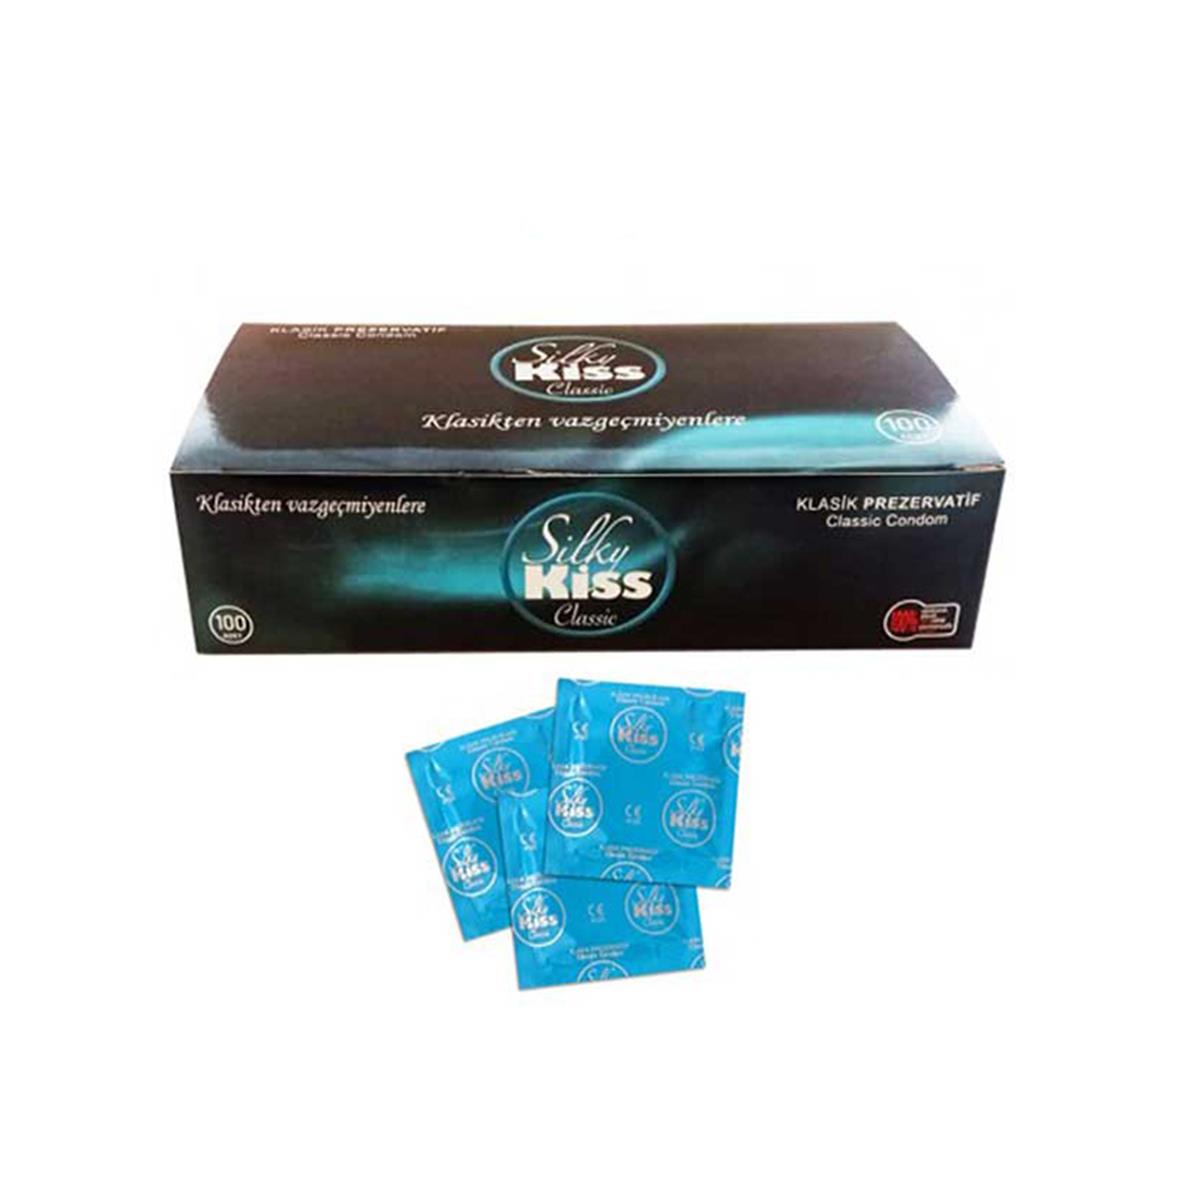 Silky Kiss Klasik Prezervatif 100 Adet Eko Paket | sislon.com